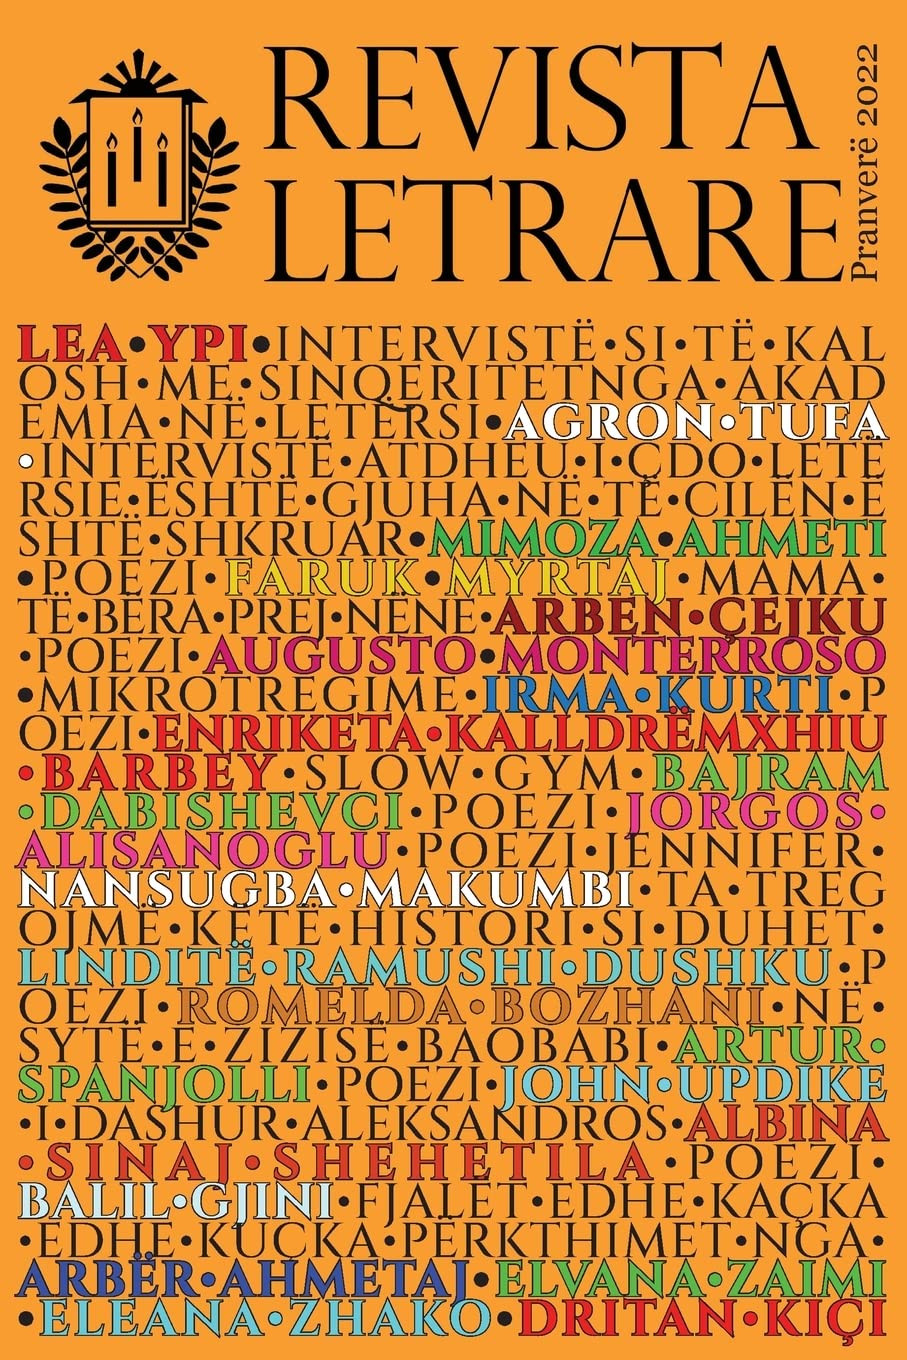 Revista Letrare Pranvere 2022